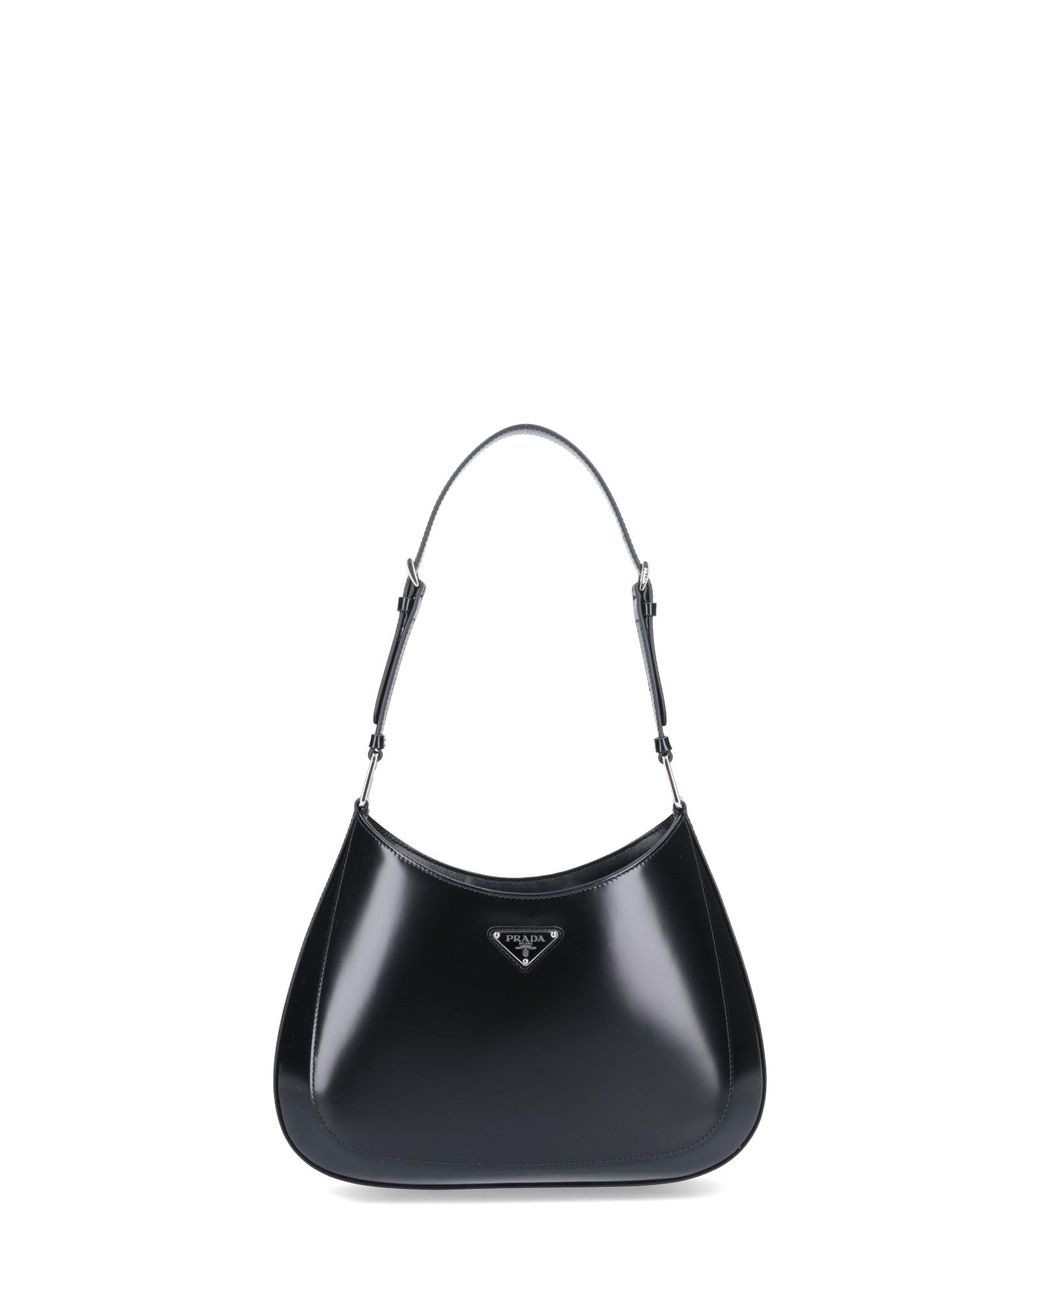 Prada Synthetic 'cleo' Bag in Nero (Black) | Lyst